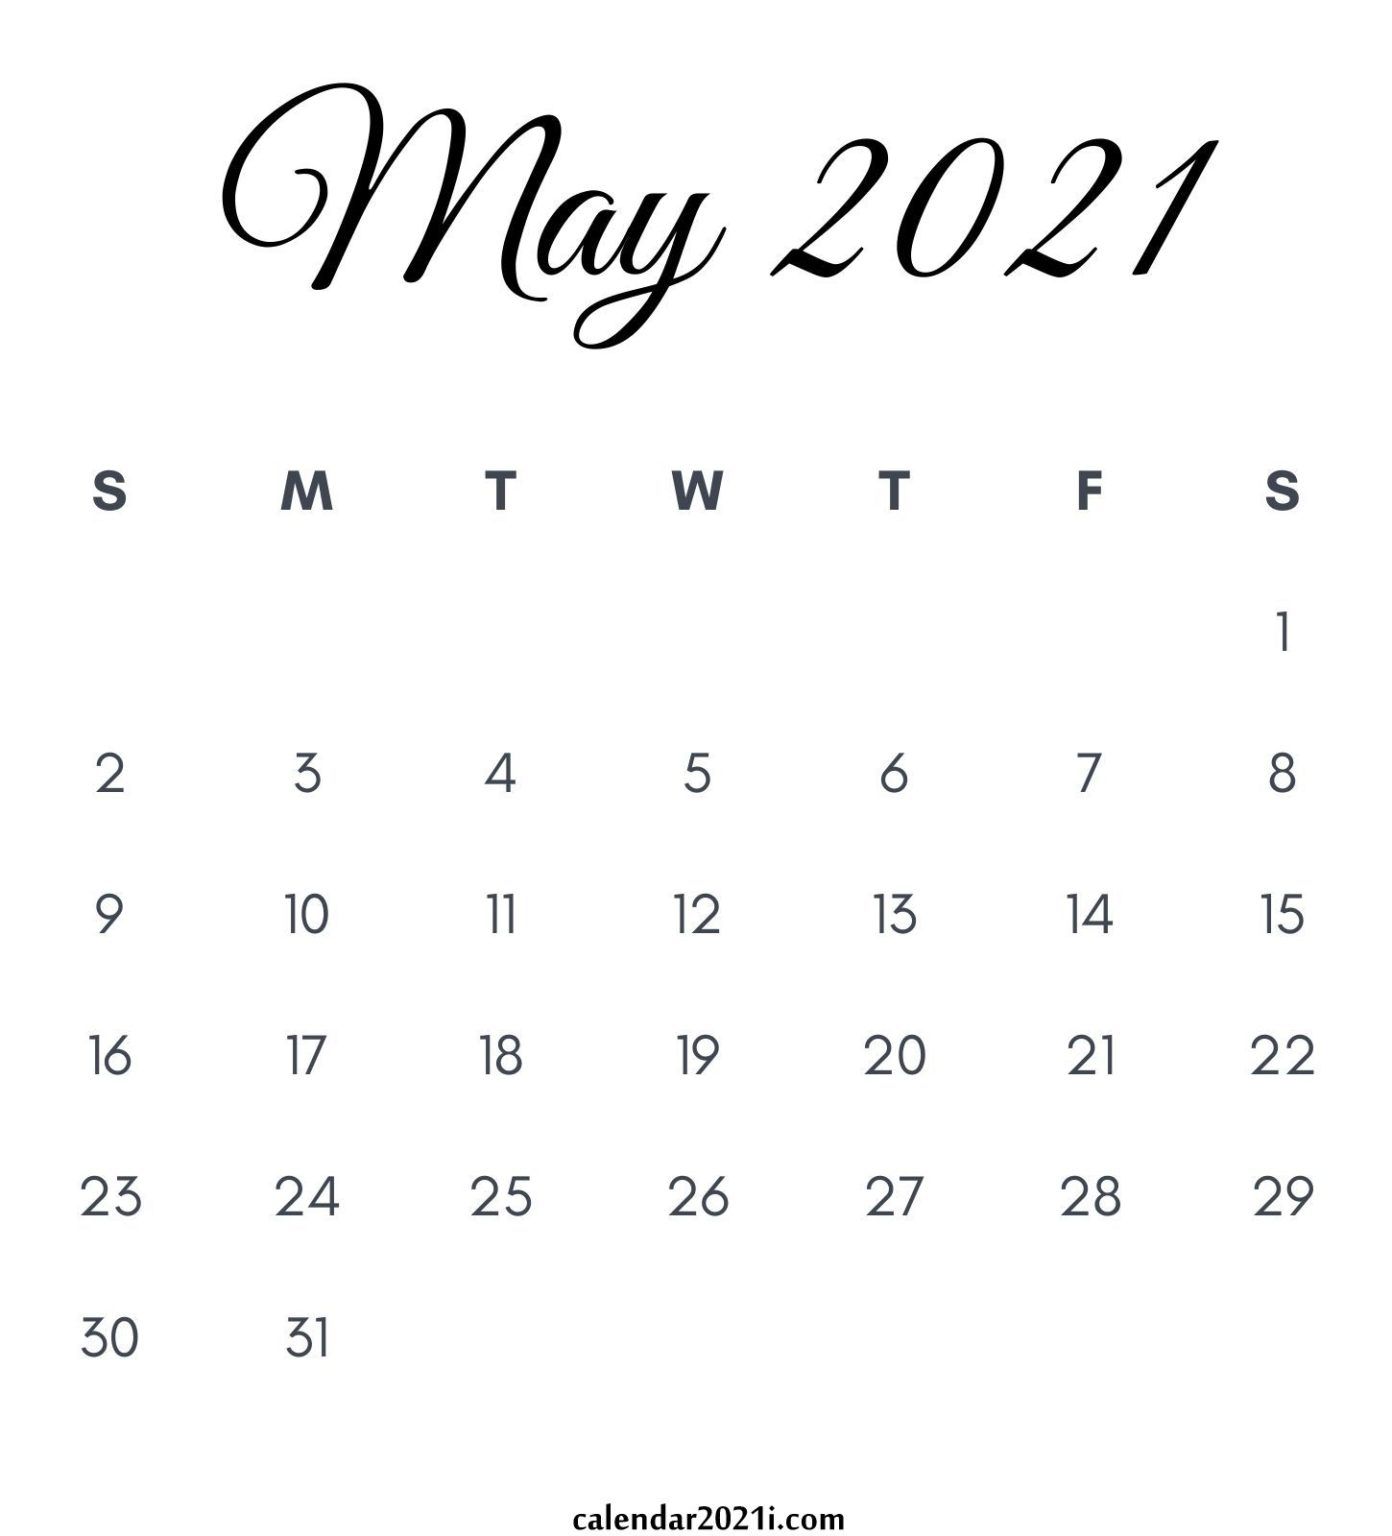 May 2021 Calendar Printable. Calendar printables, 2021 calendar, Calendar